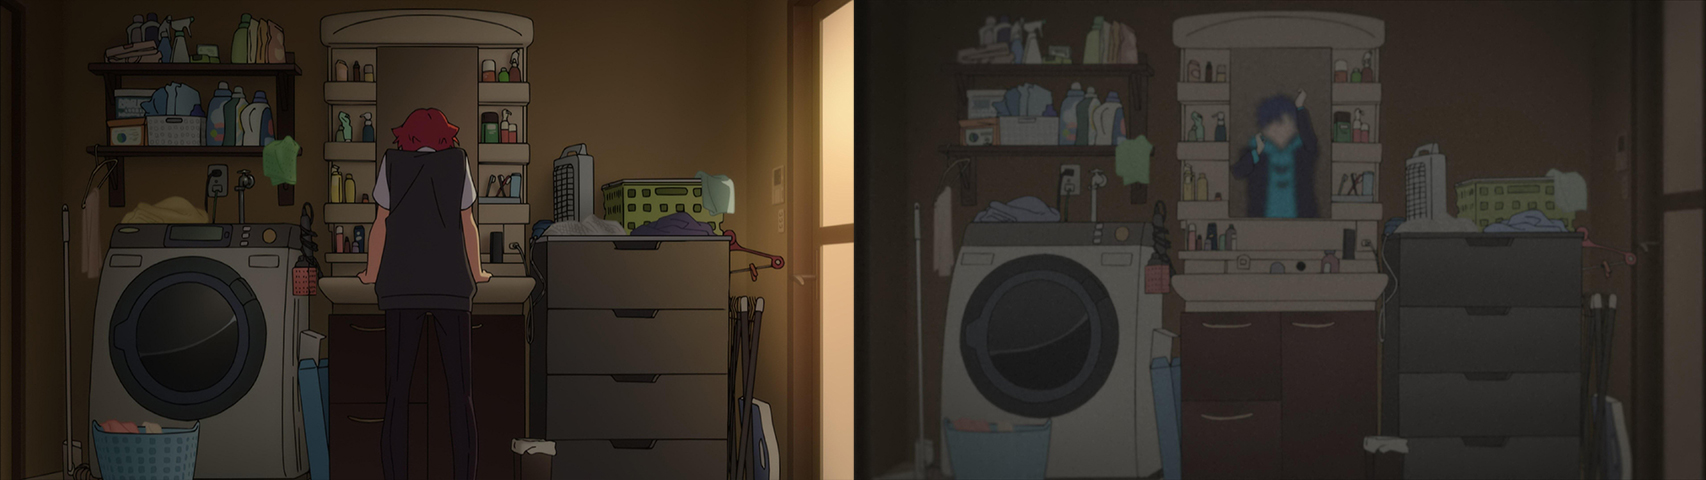 Yama no Susume Second Season - My Anime Shelf